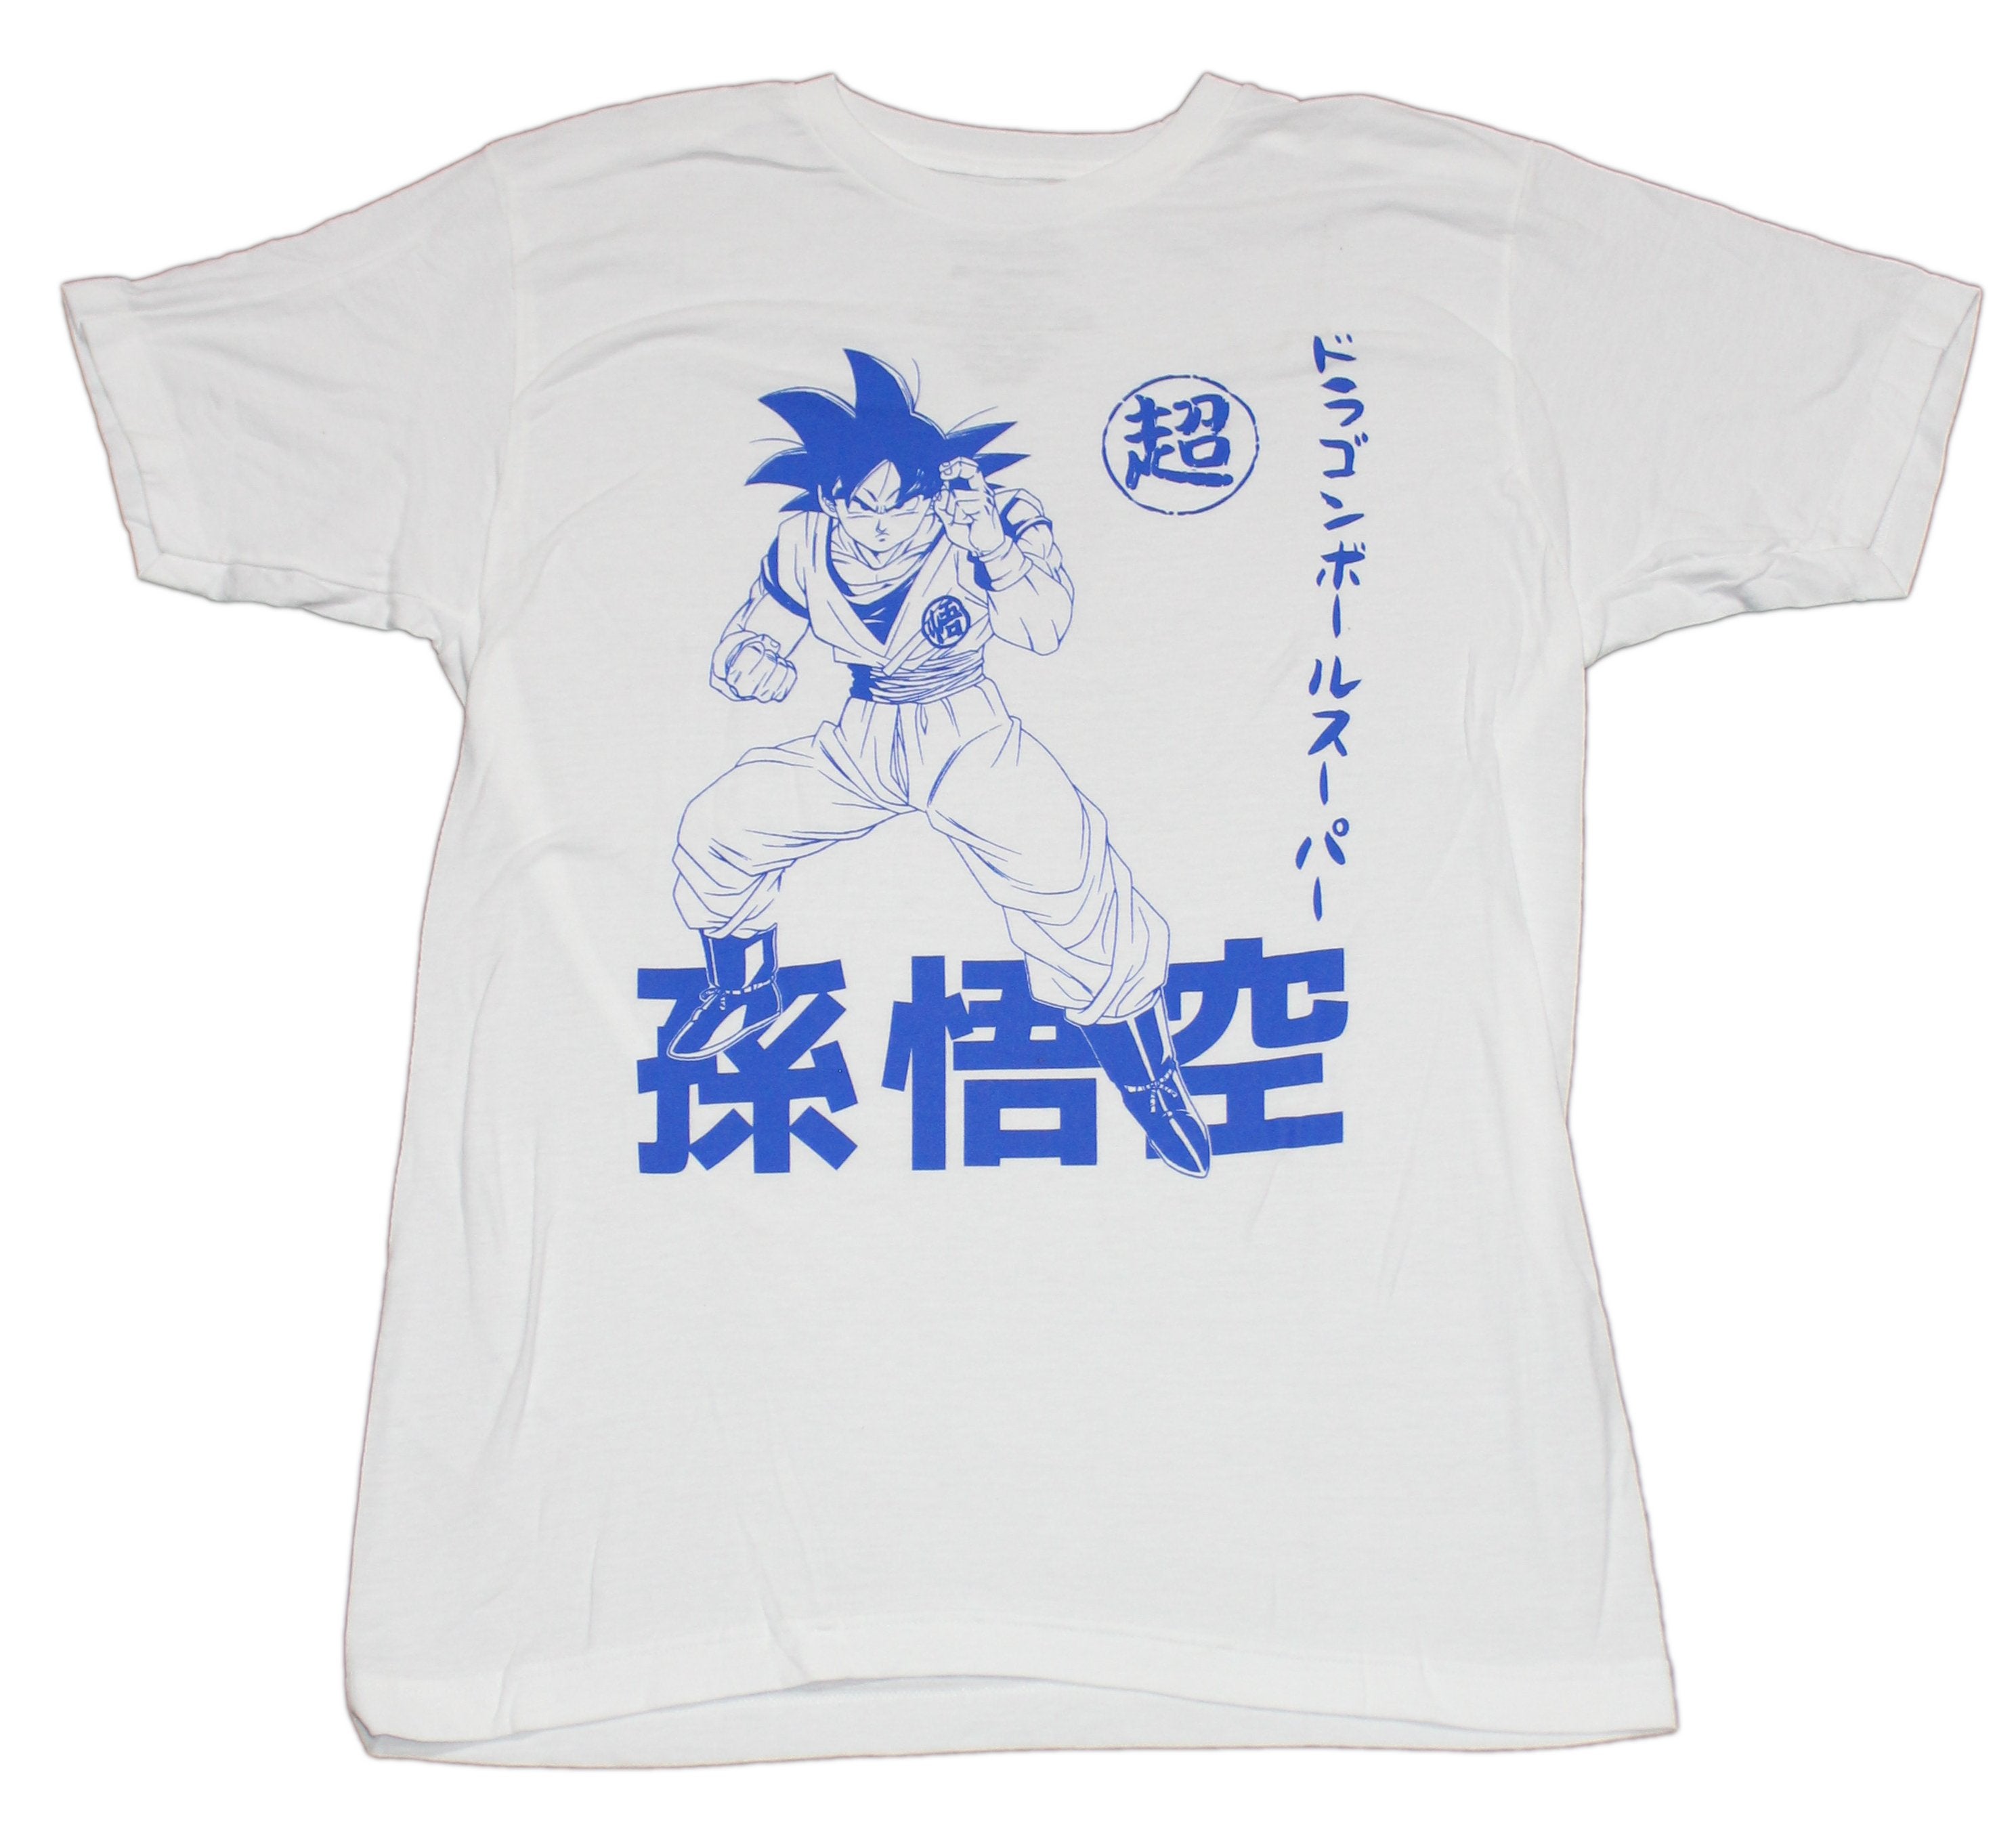 Dragon Ball Z Mens T-Shirt - Blueprint Goku Kanji Image